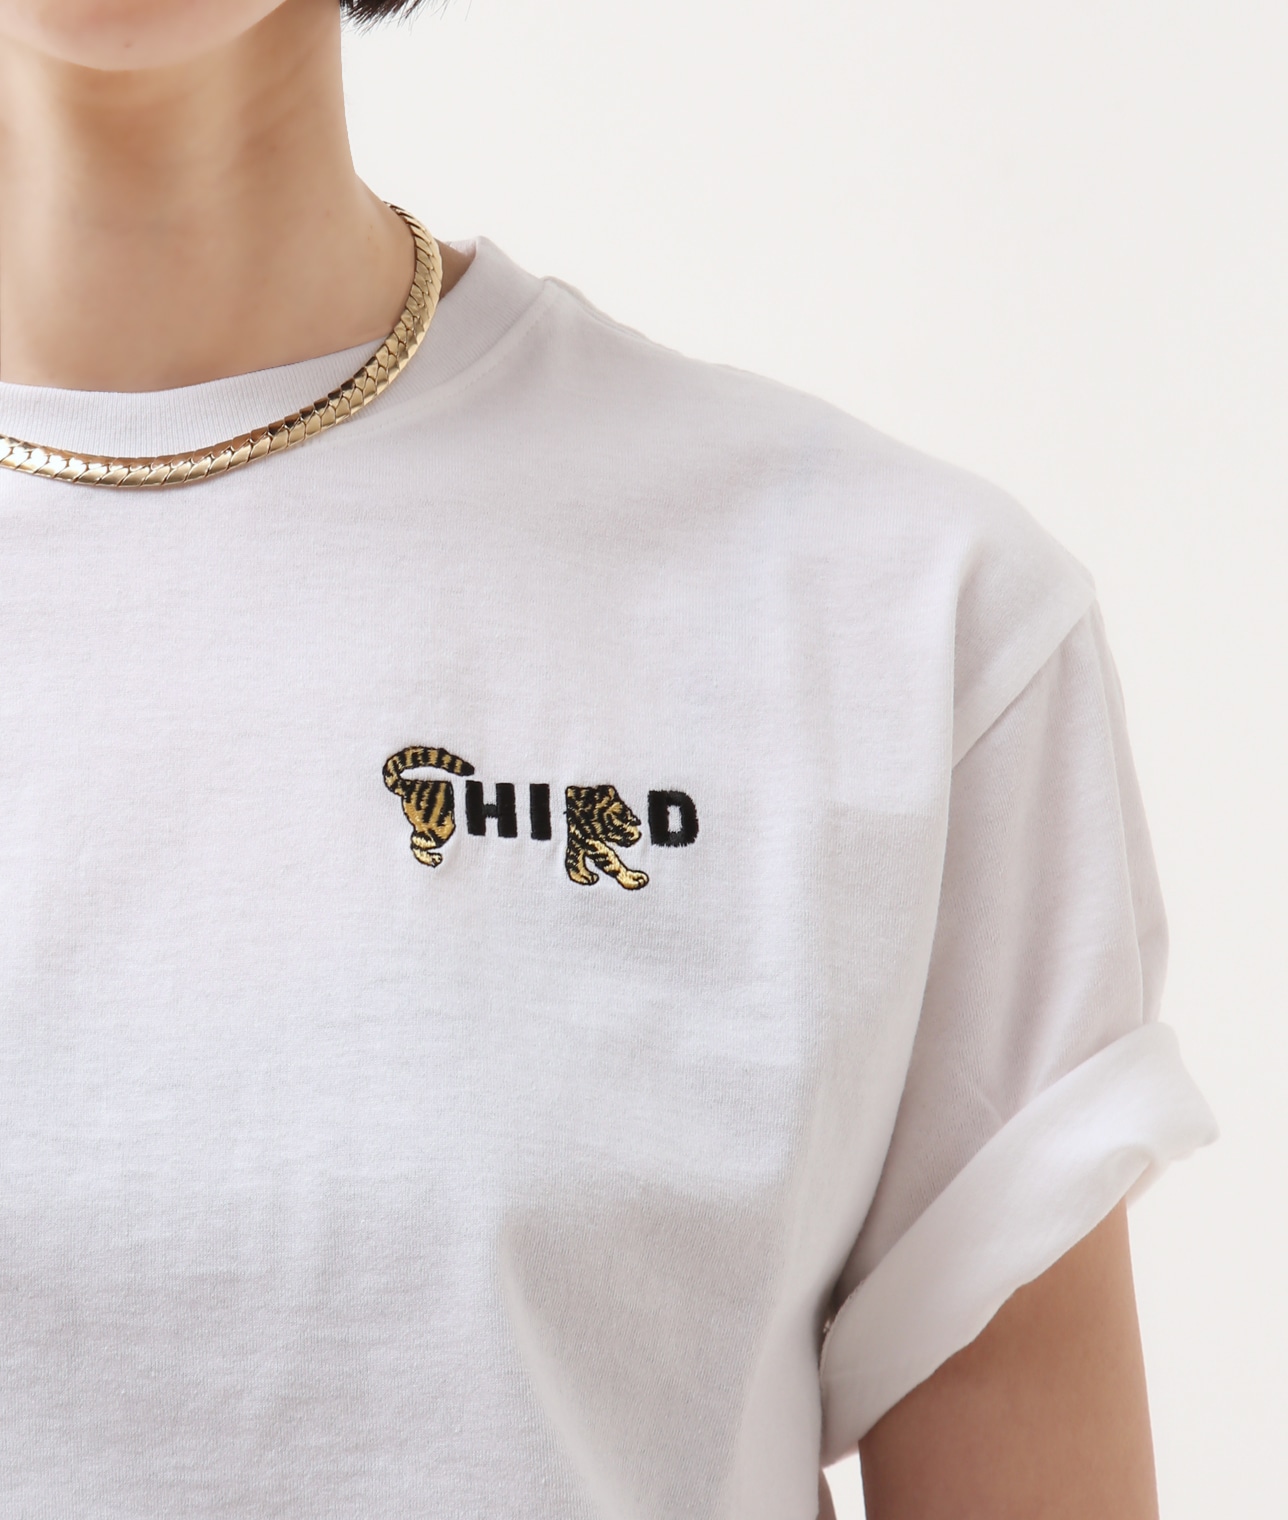 ”THIRD” Tigerロゴ刺繍Tシャツ 詳細画像 ホワイト 5